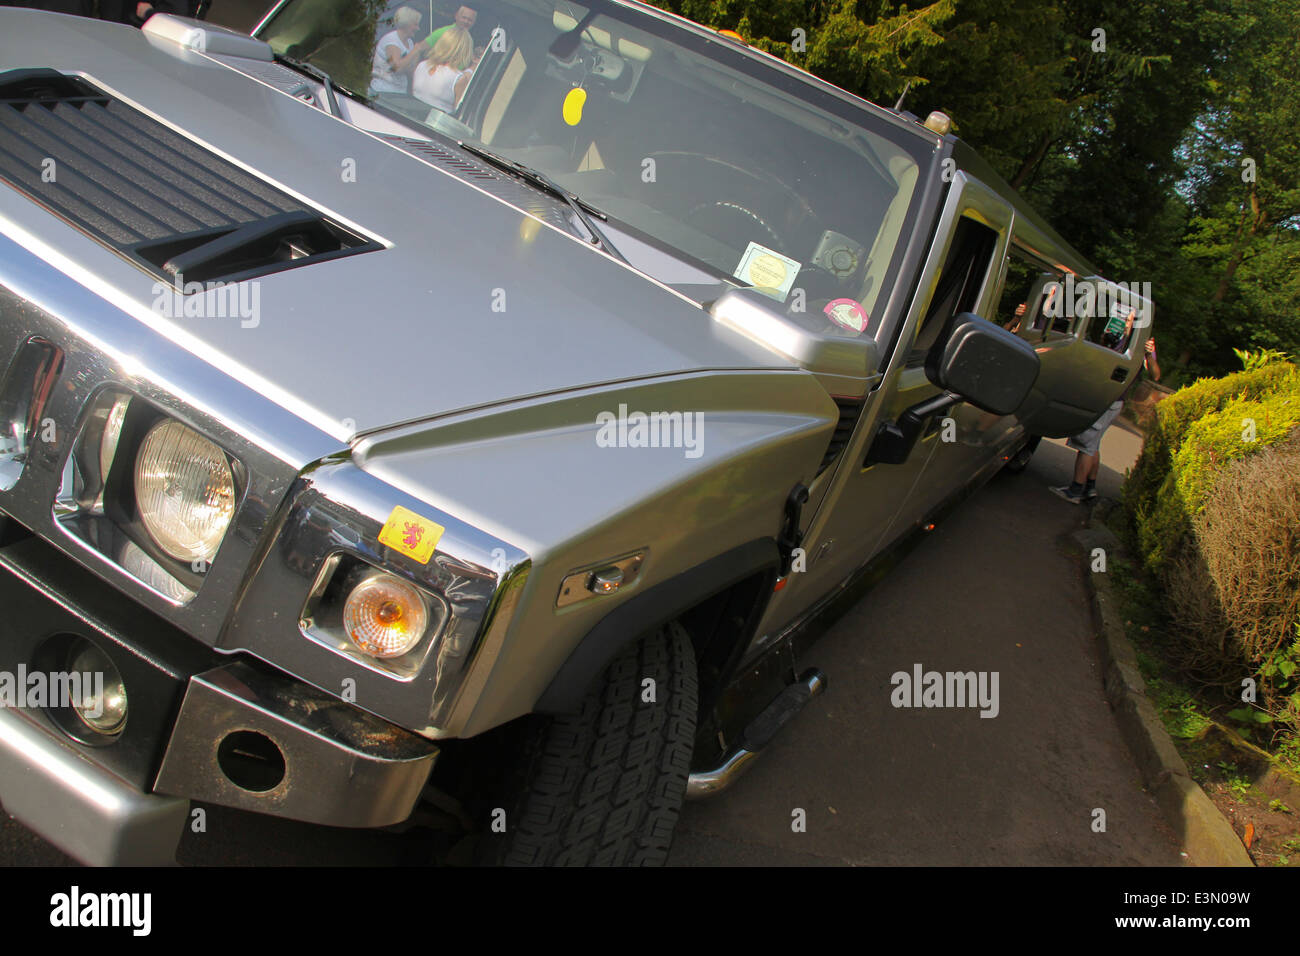 Hummer limousine car Stock Photo